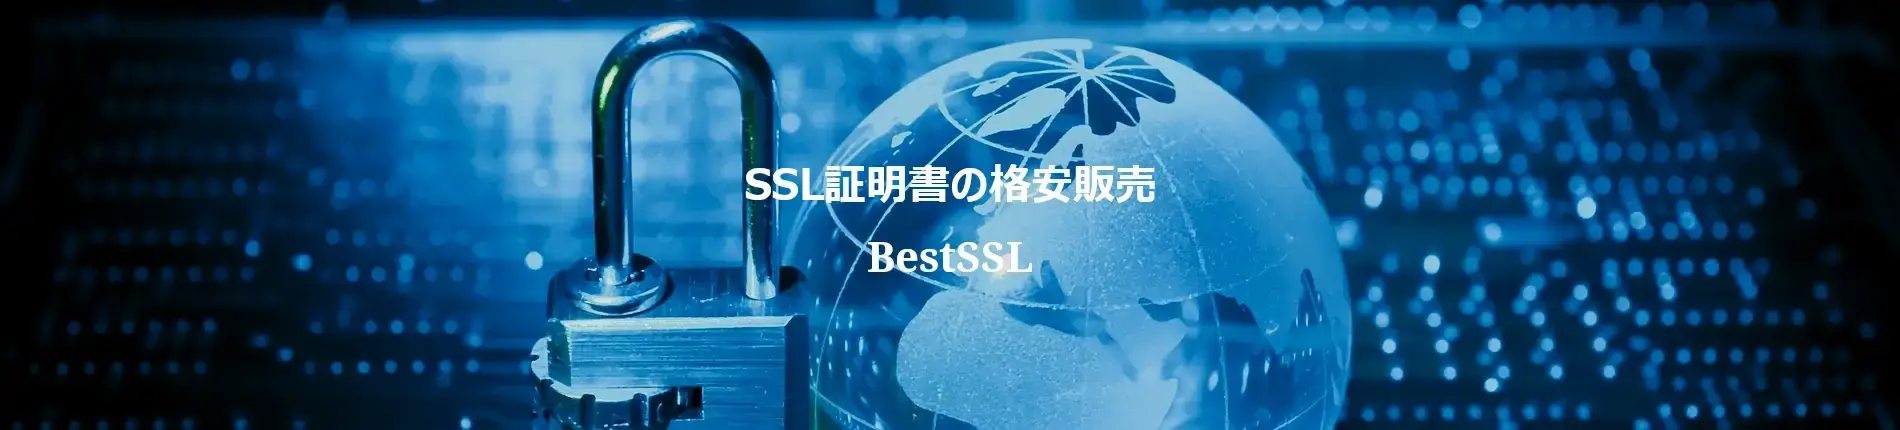 SSL証明書の格安販売 | BestSSL